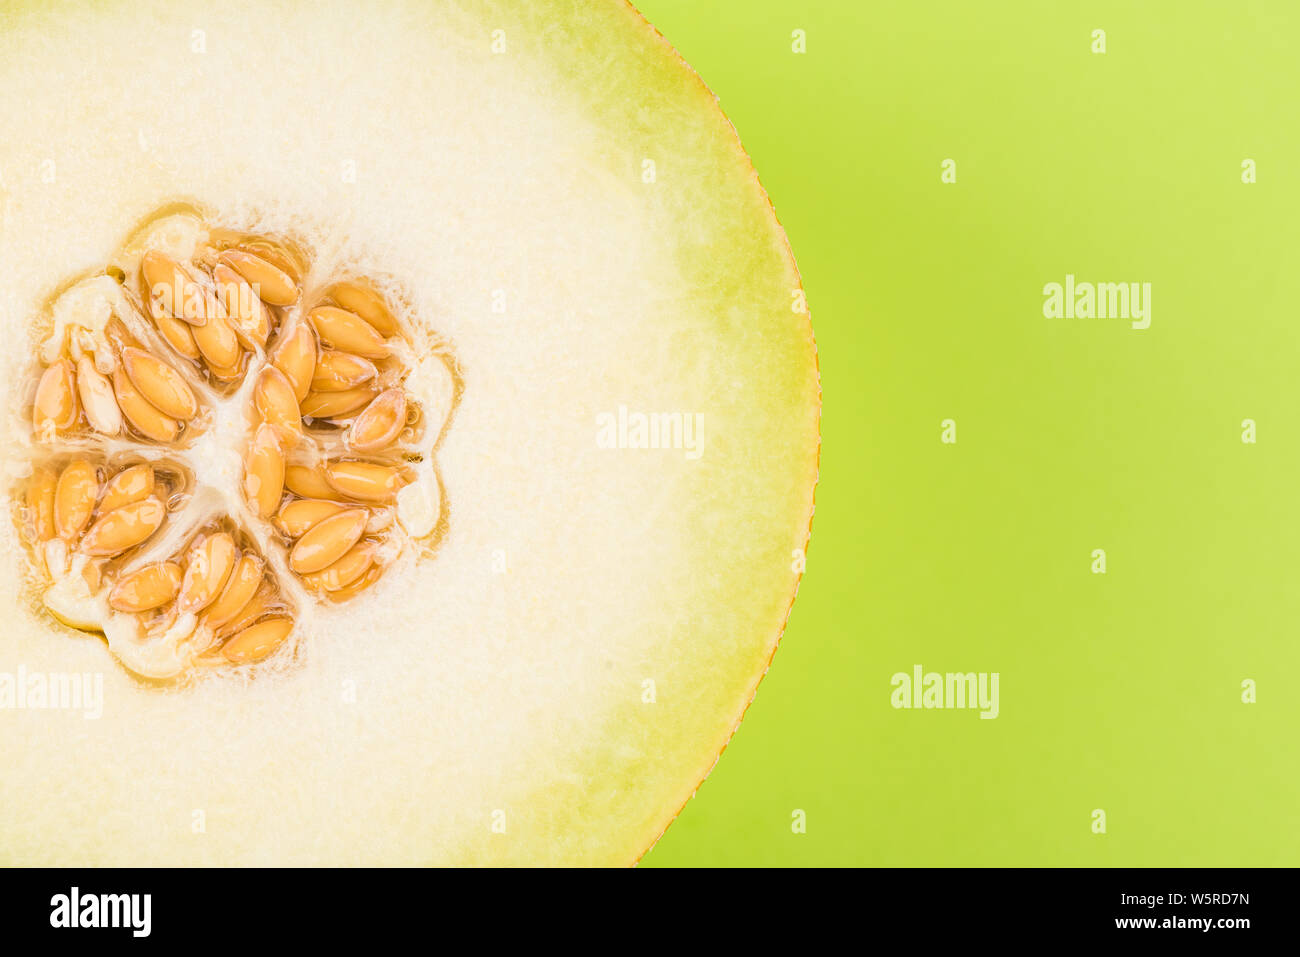 Honeydew Musk Melon Sliced in Half on Pastel Background. Stock Photo